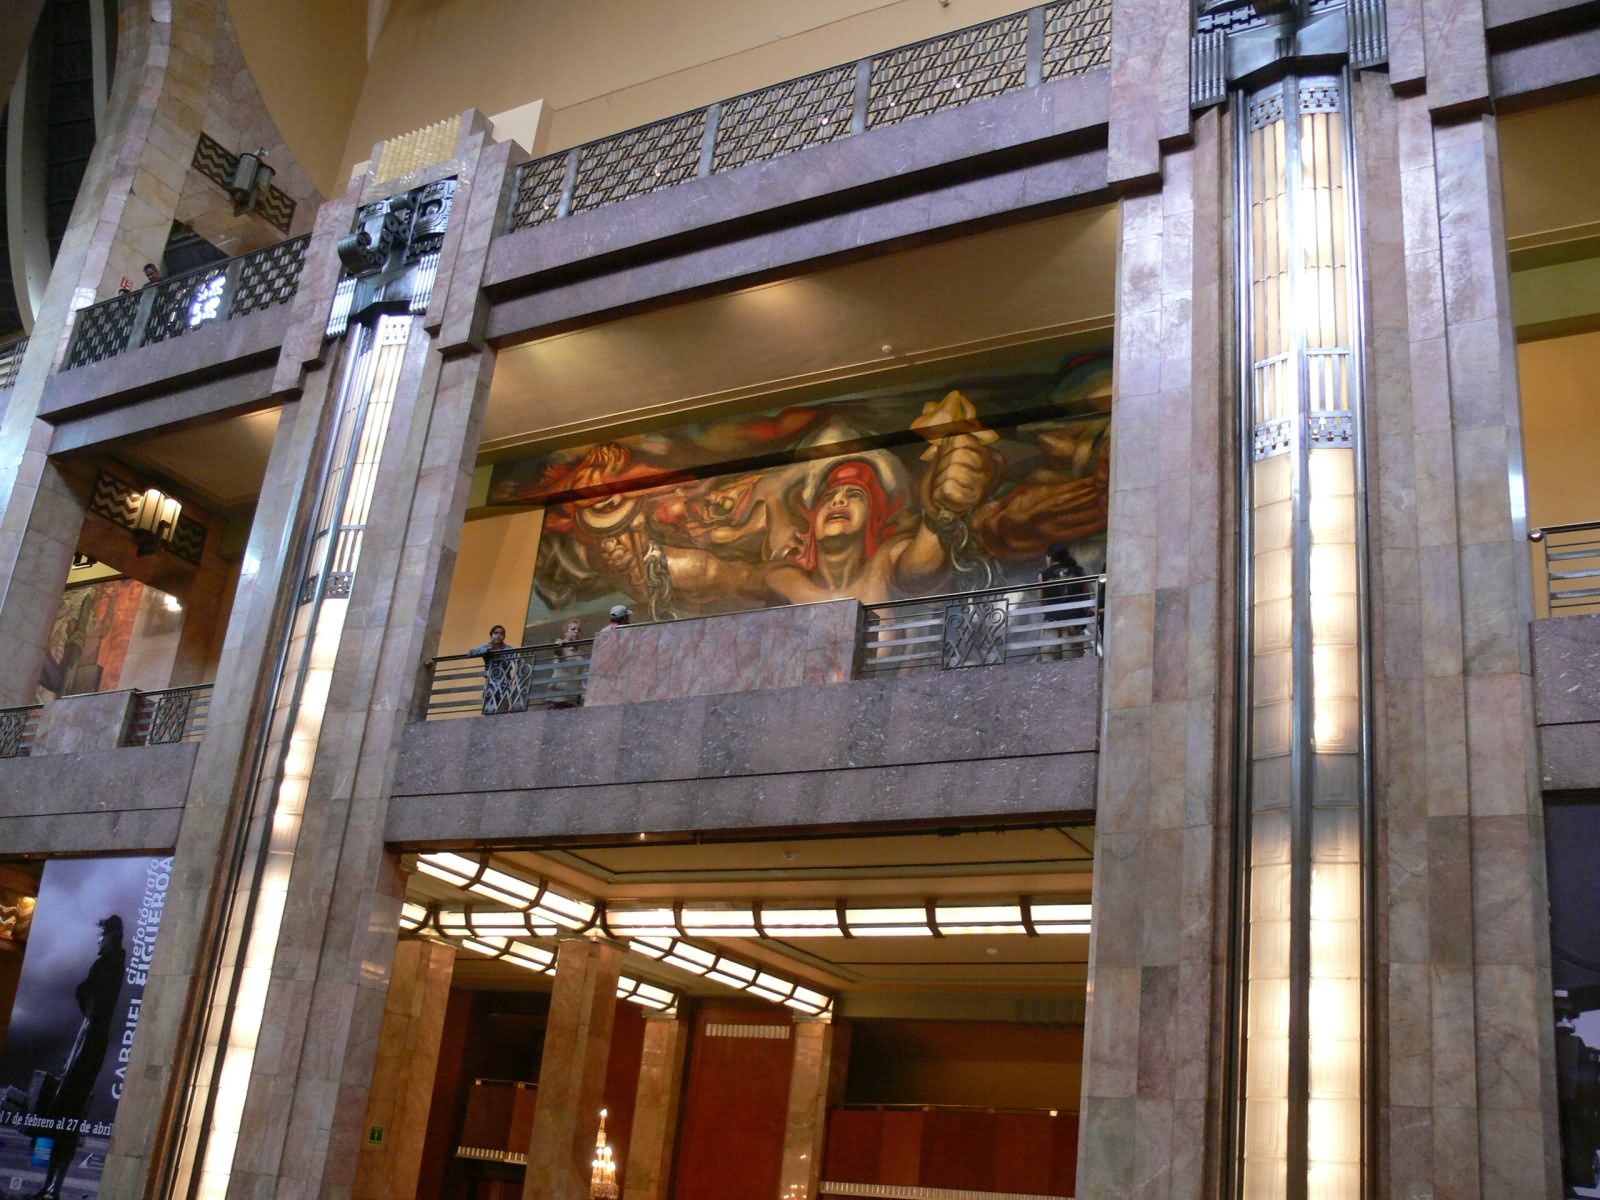 Image Of Light Panel Inside The Palacio de Bellas Artes